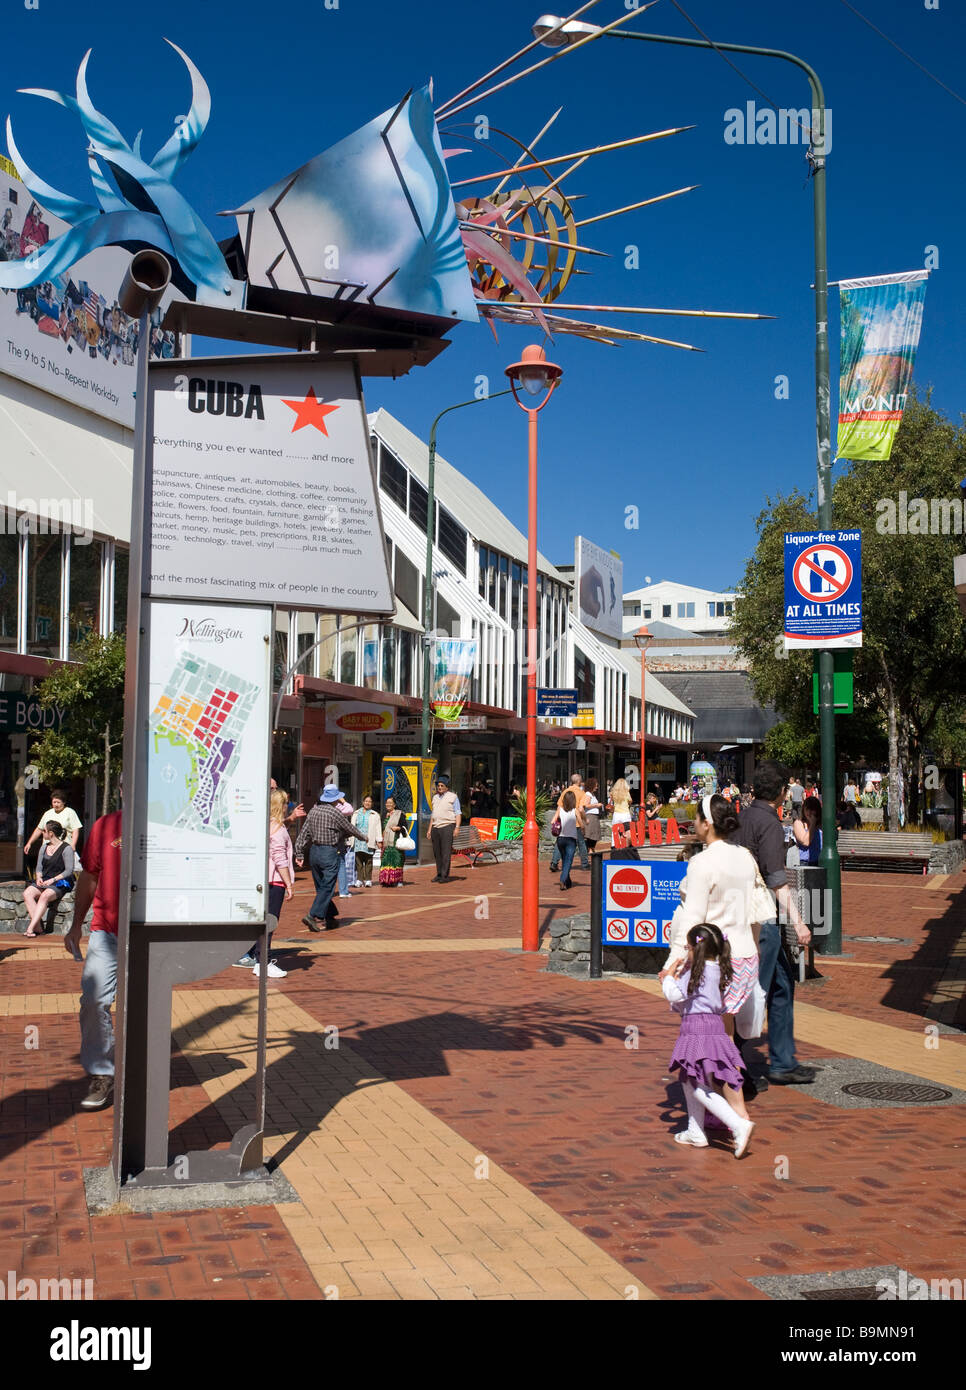 Cuba Street, Wellington New Zealand Stock Photo